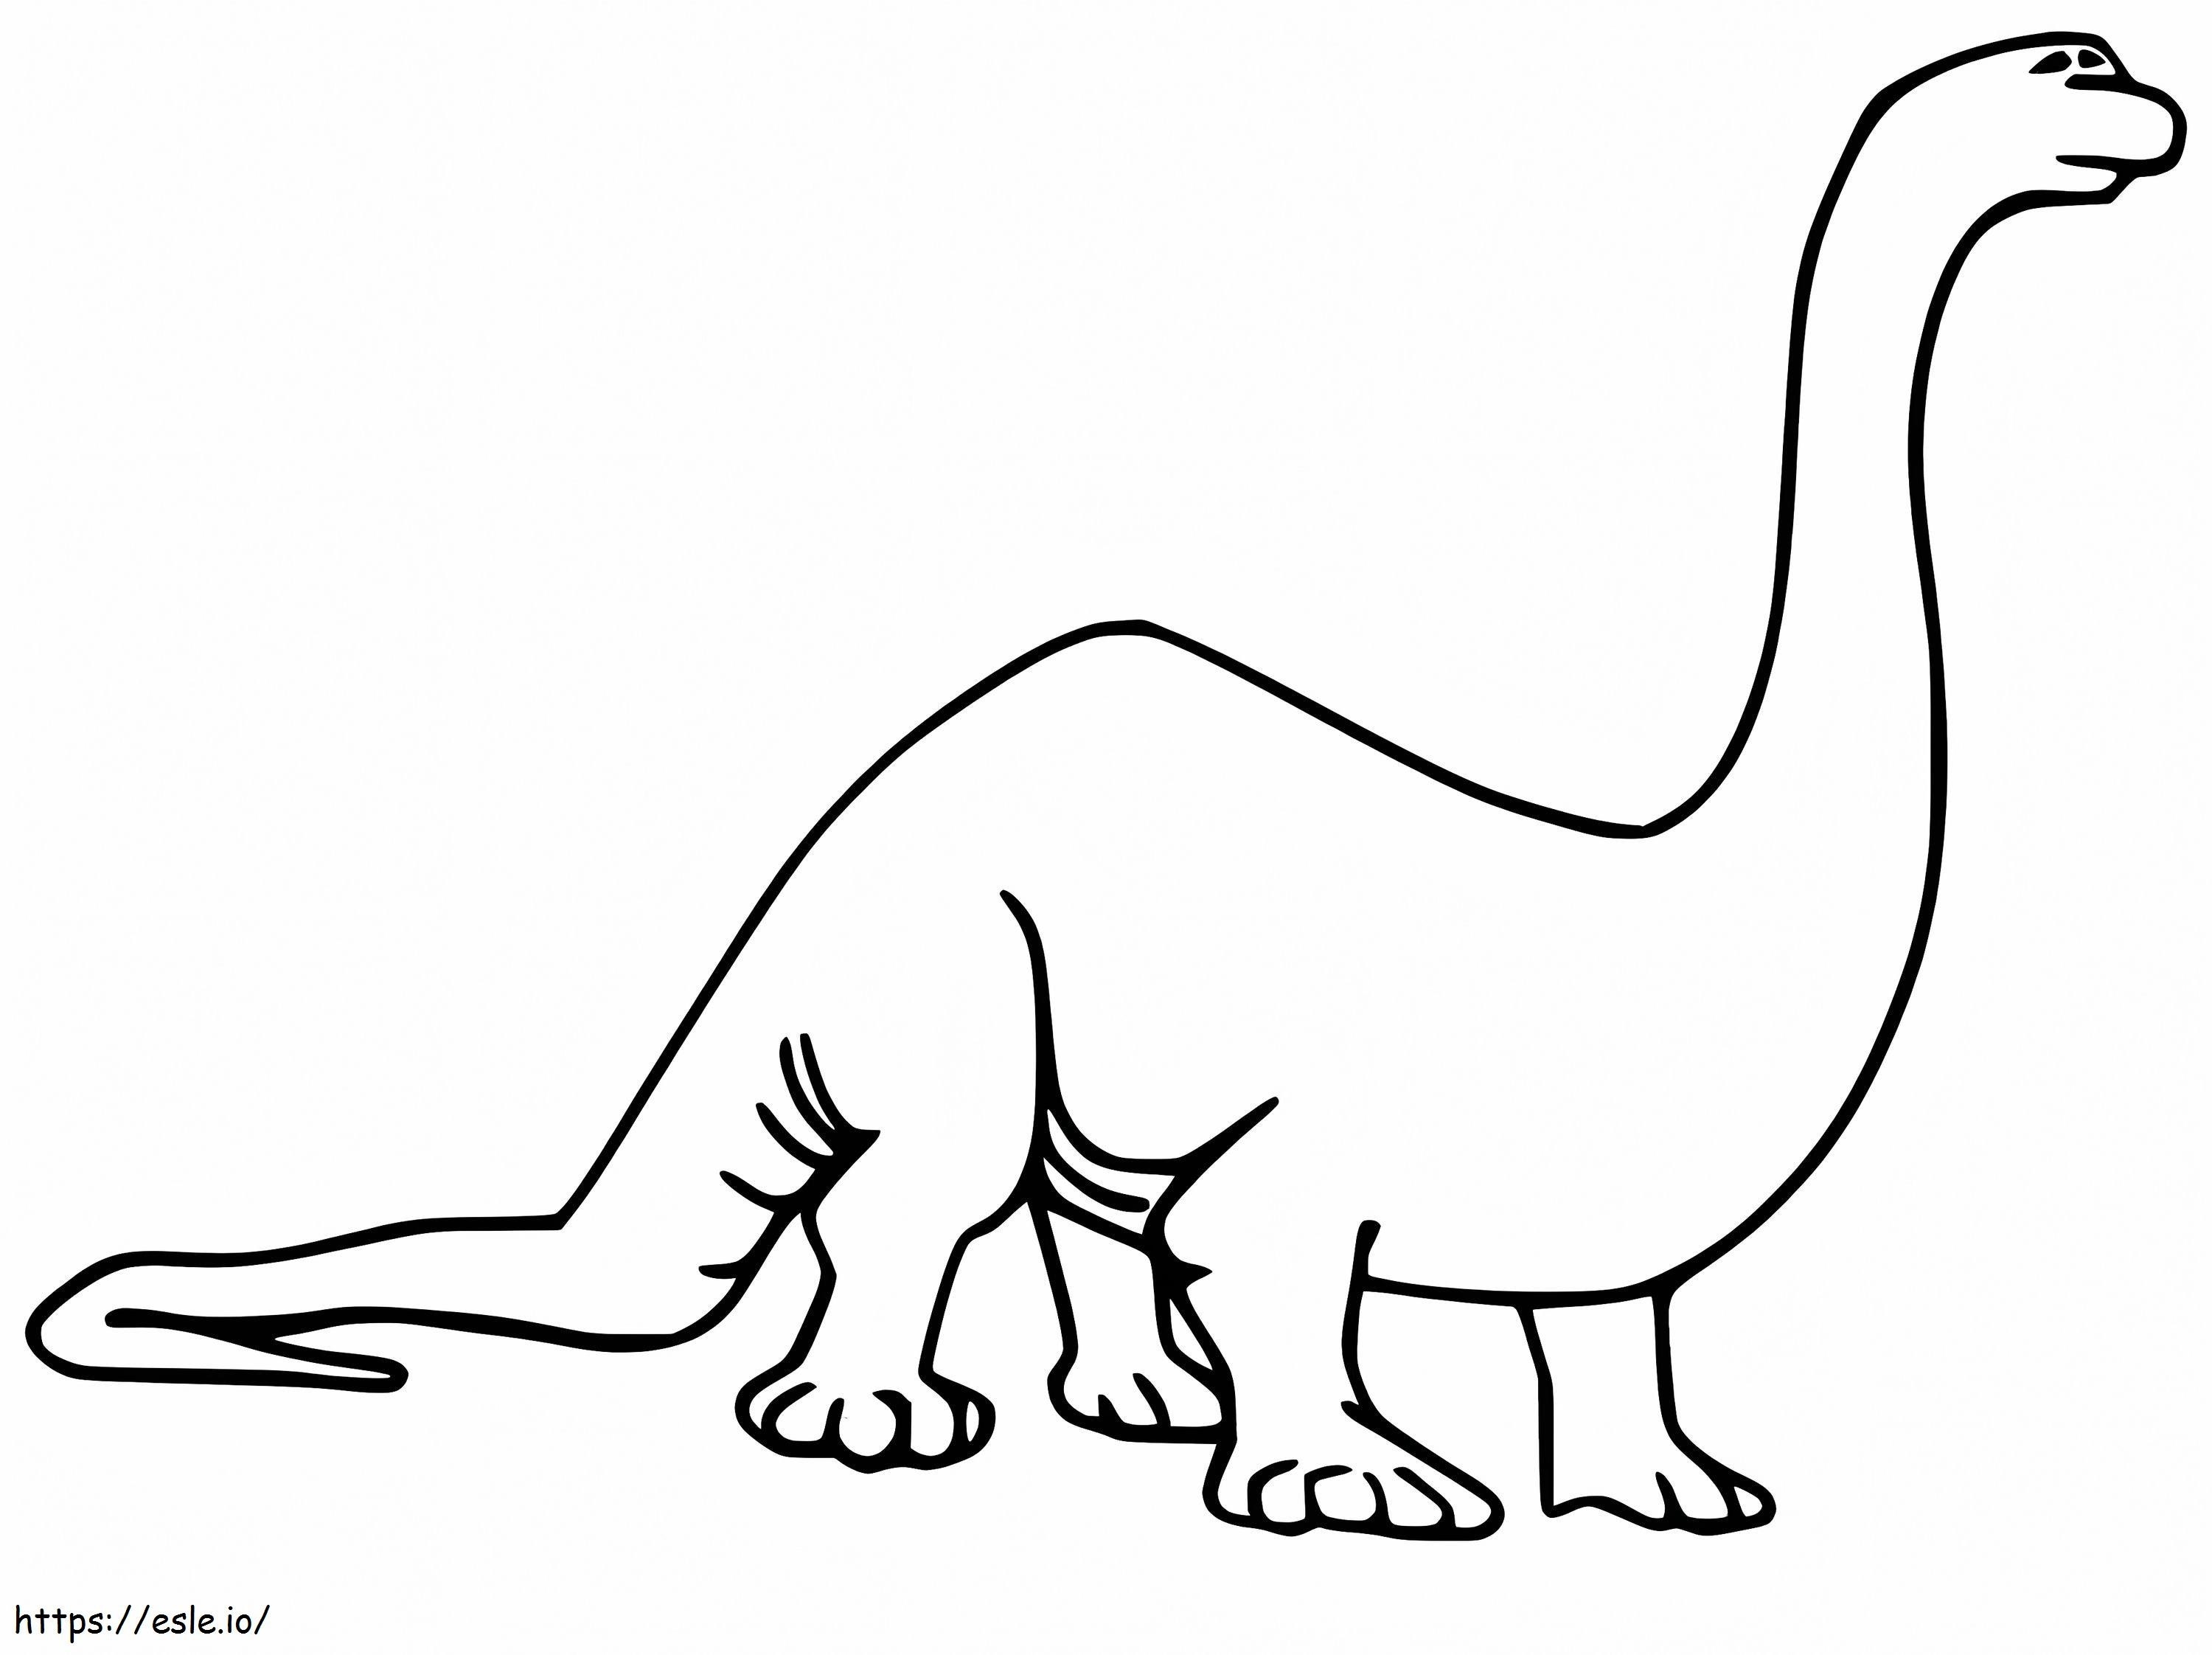 Brachiosaurus 7 coloring page